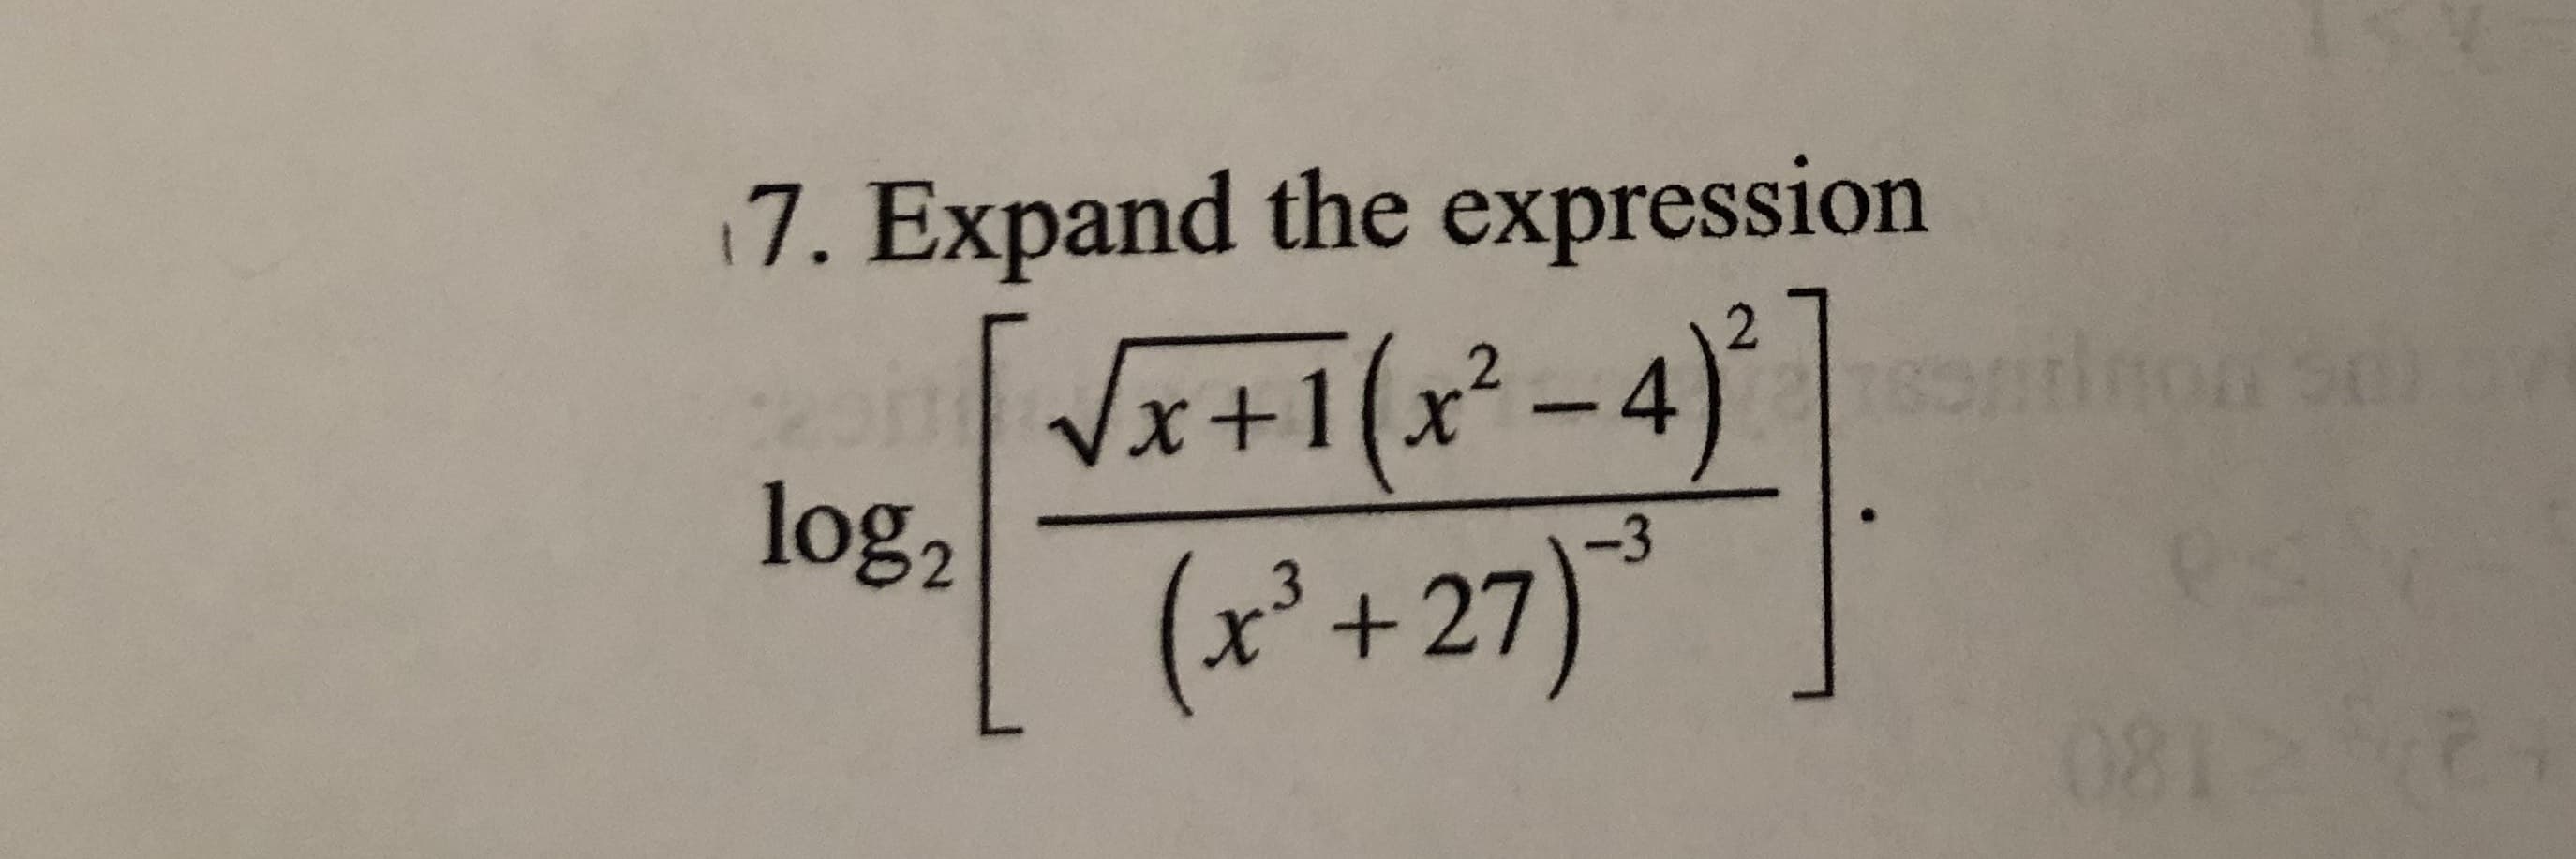 17. Expand the expression
Vx+1(x² - 4) |ninon se
log2
183
(r°+27)*
-3
081 2
